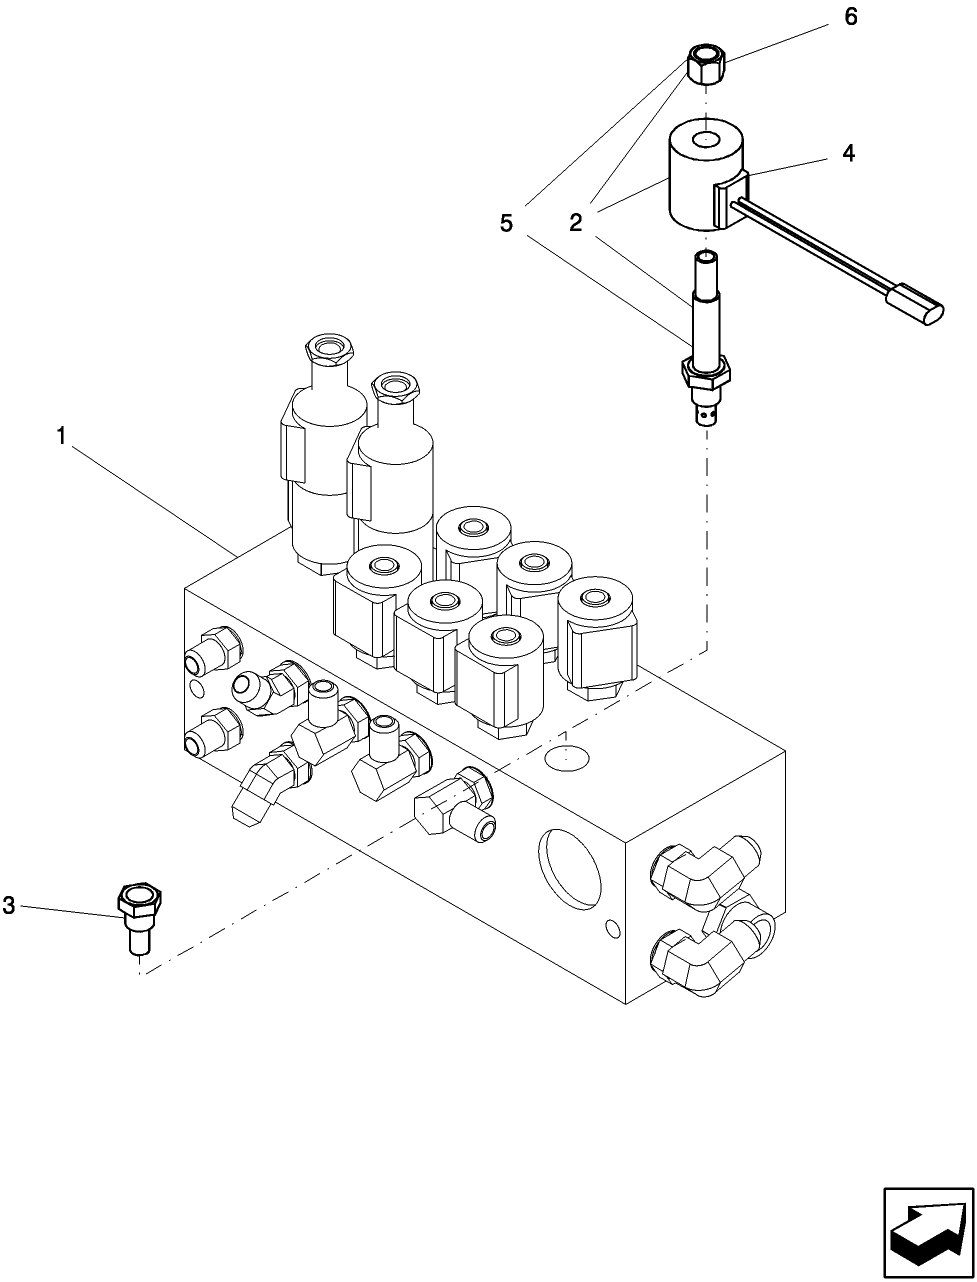 H.20.G(05) HYDRAULIC - SUSPENDED BOOM - OPEN CENTER DUMP VALVE